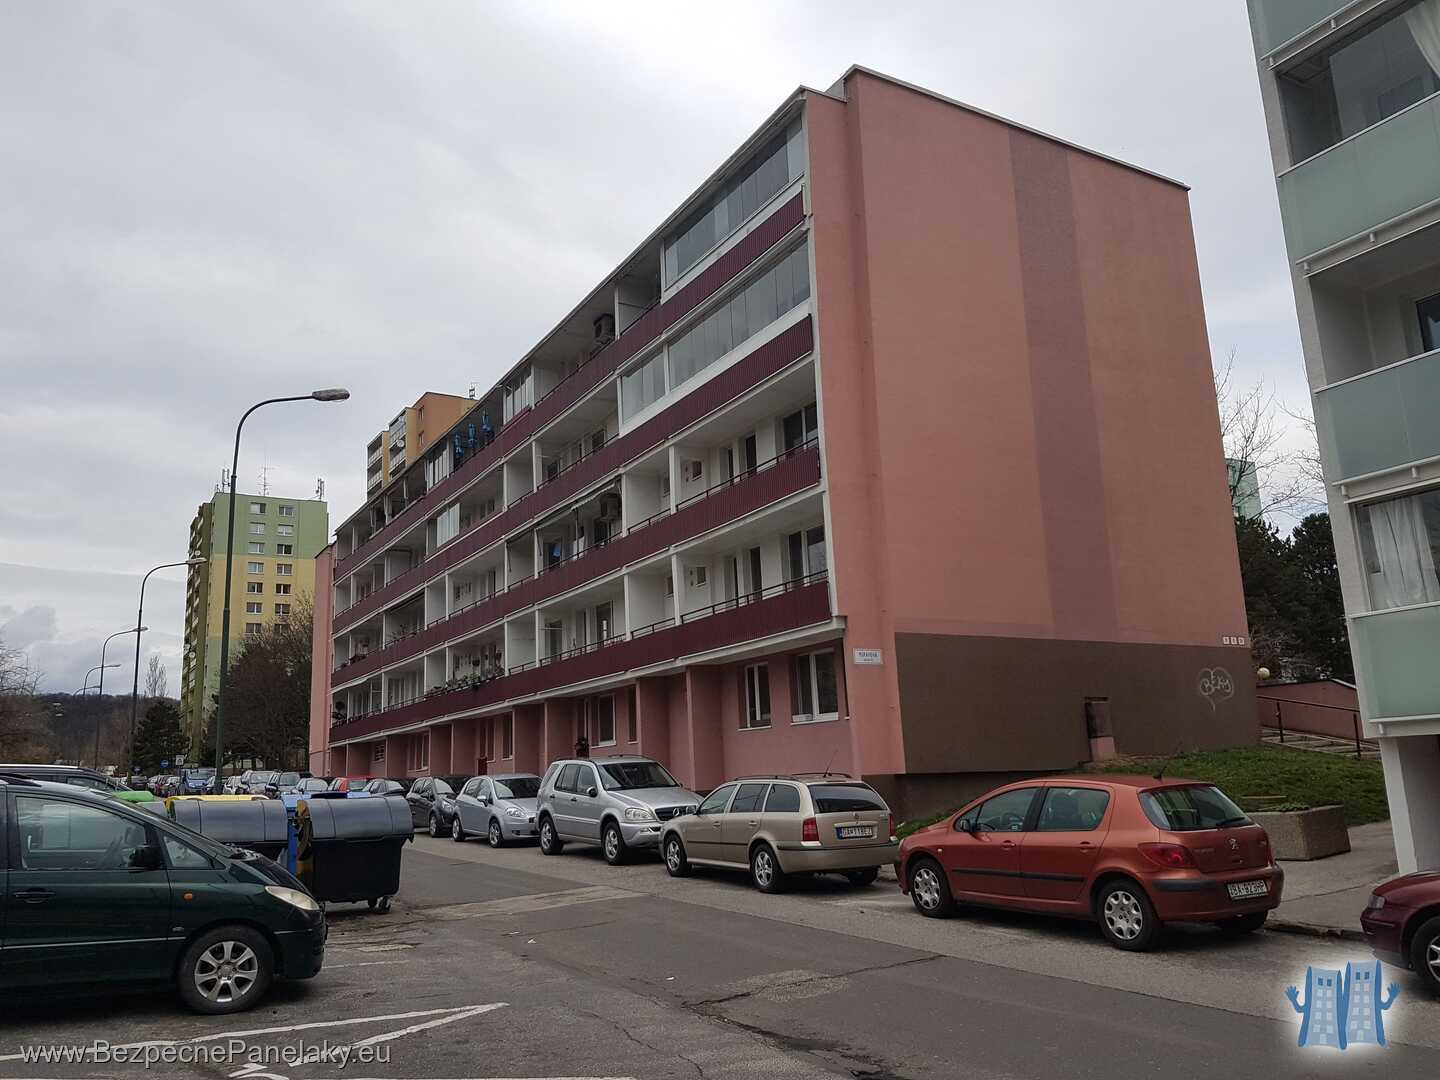 Bytový dom Púpavová 6-18,32-36, Bratislava